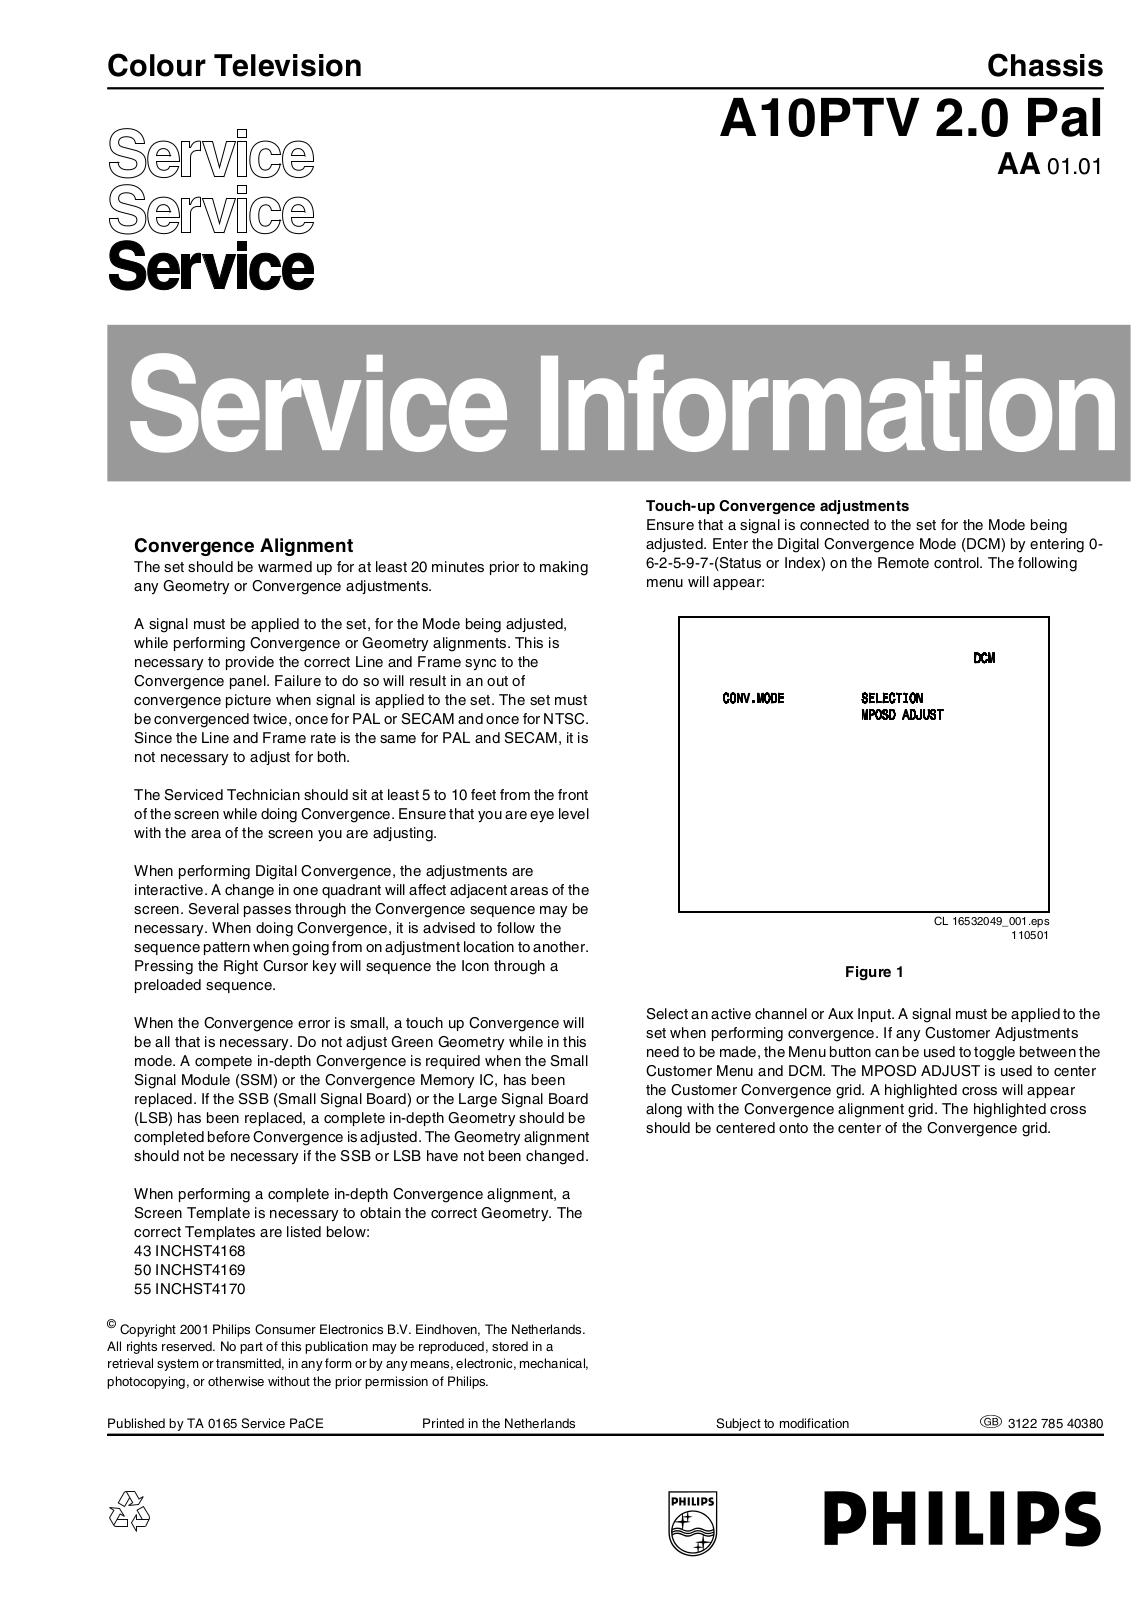 Philips A10PTV Service Manual